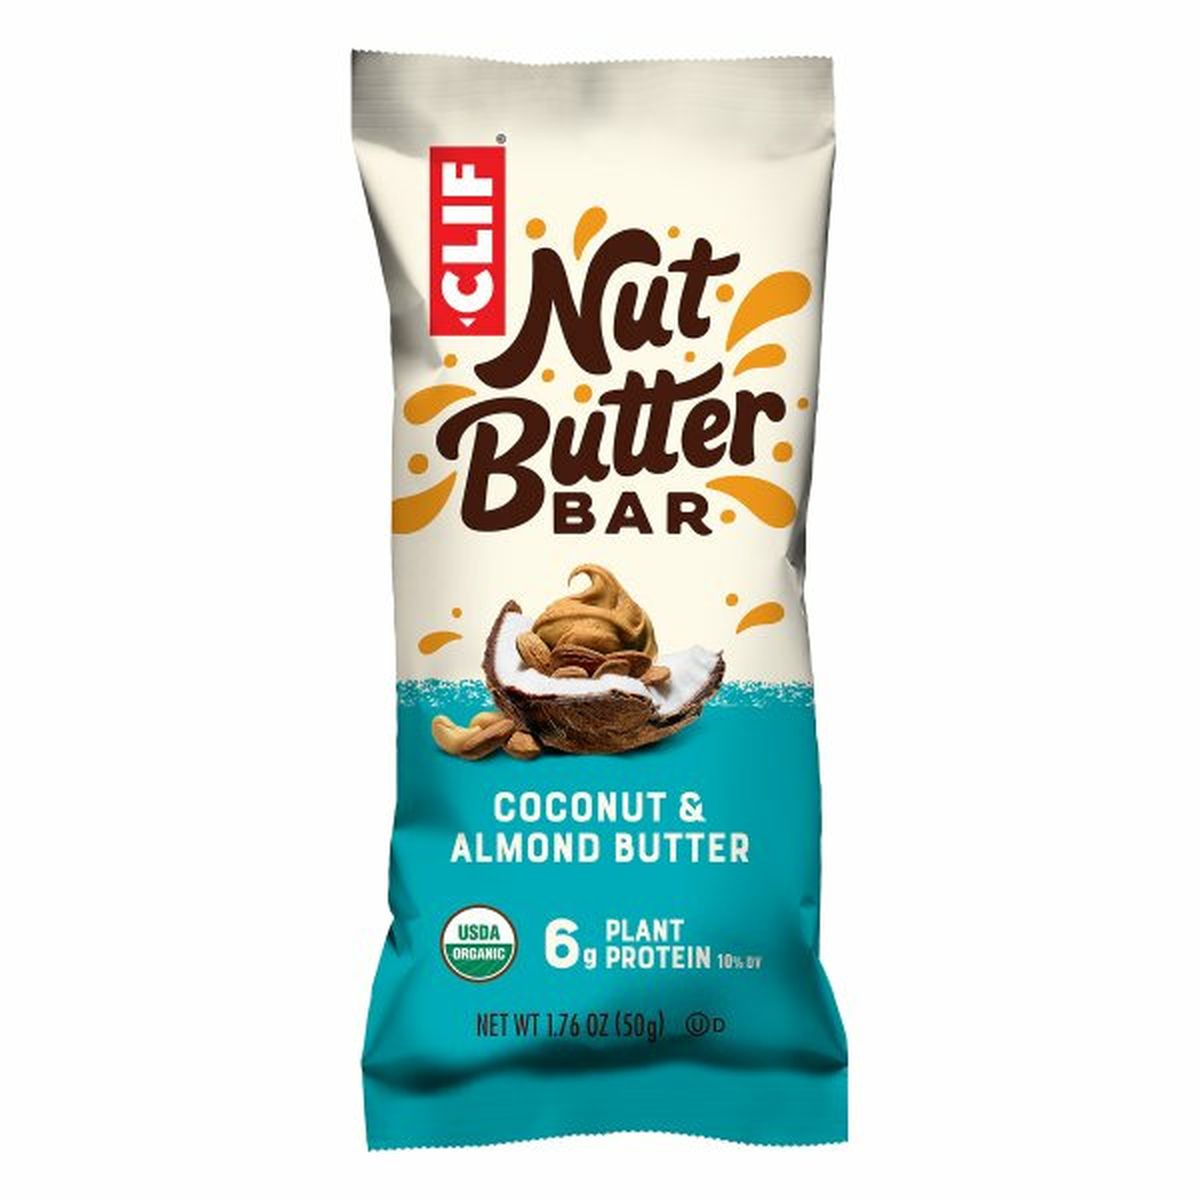 Calories in CLIF BAR Nut Butter Bar, Coconut Almond Butter